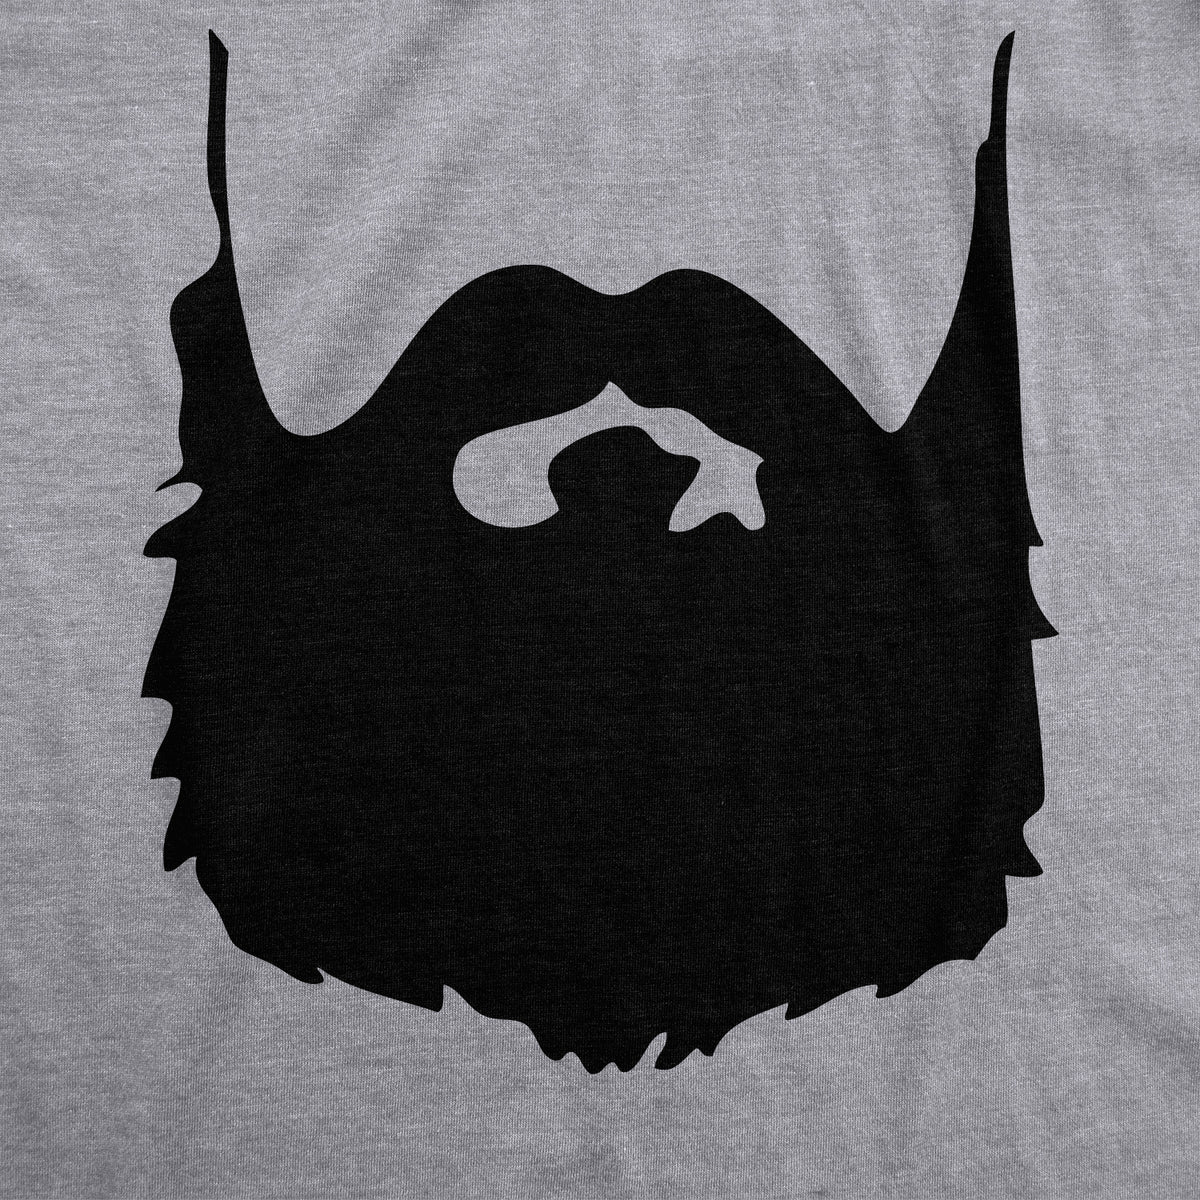 Ask Me About My Beard Flip Men&#39;s T Shirt